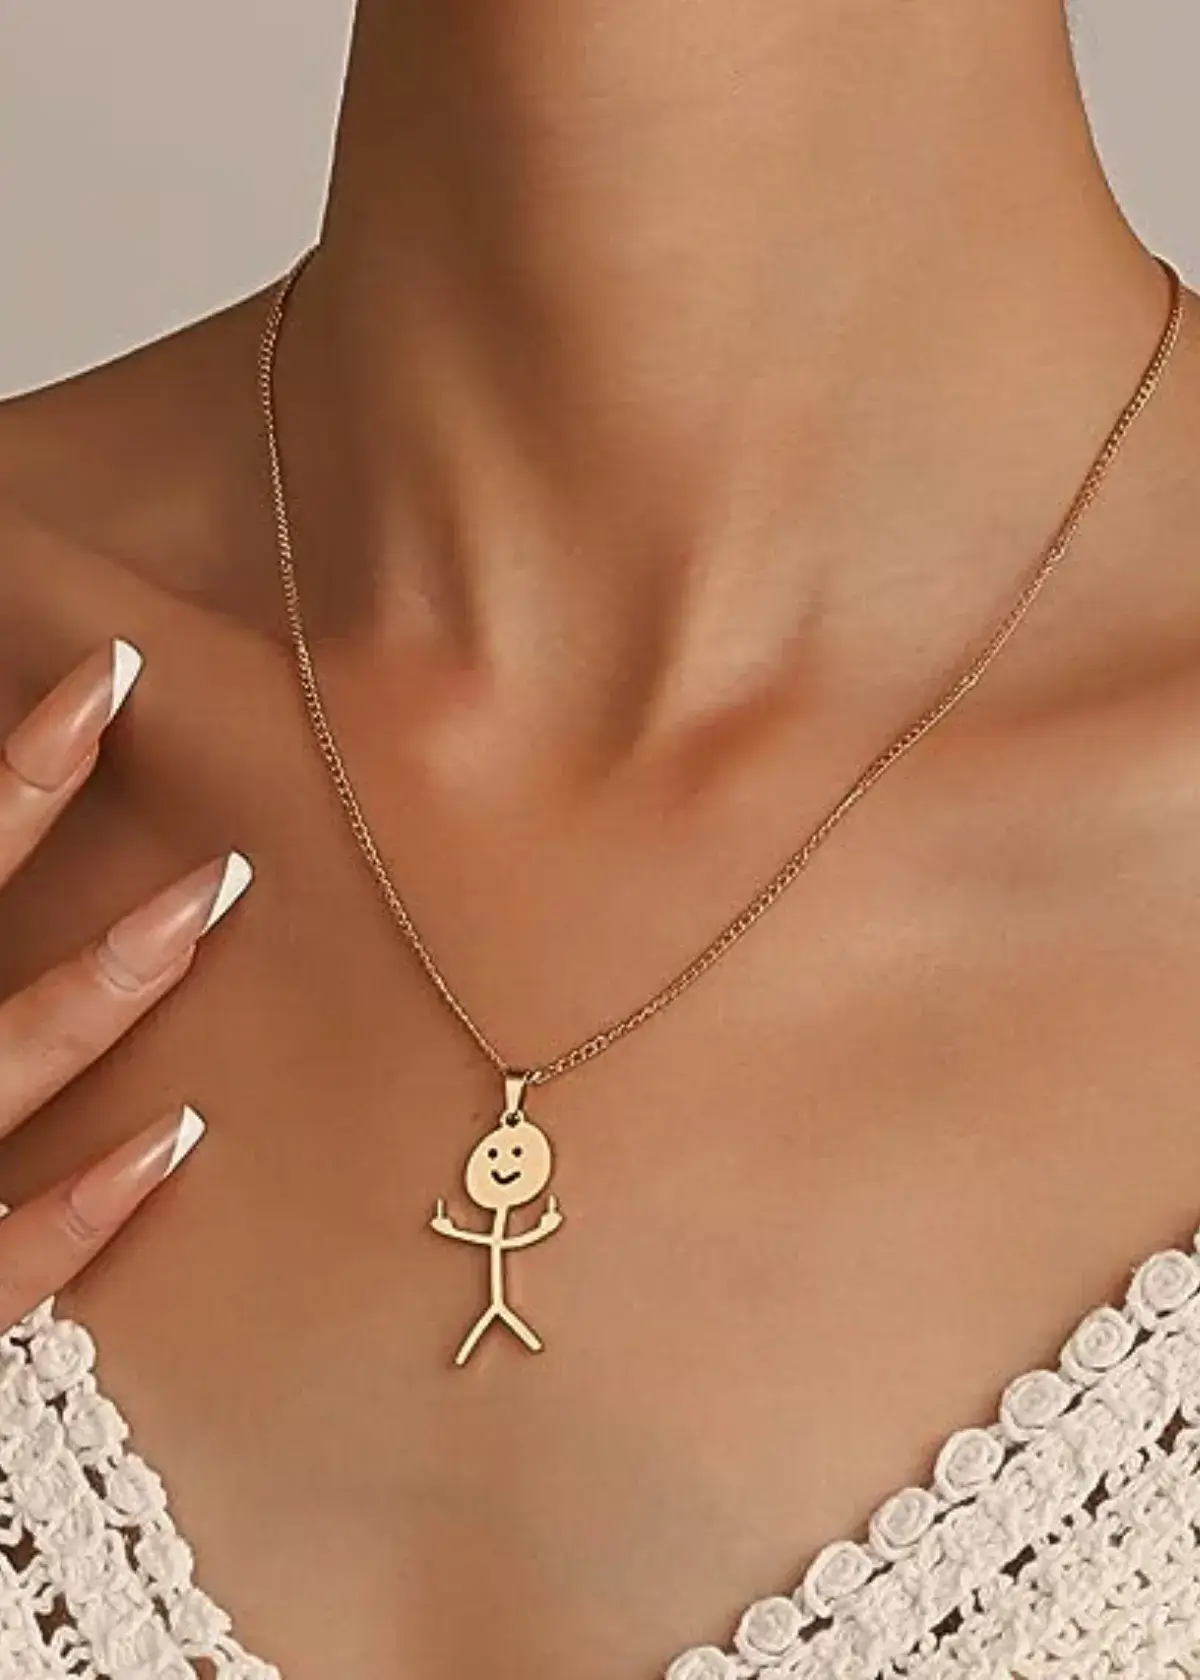 middle finger necklace